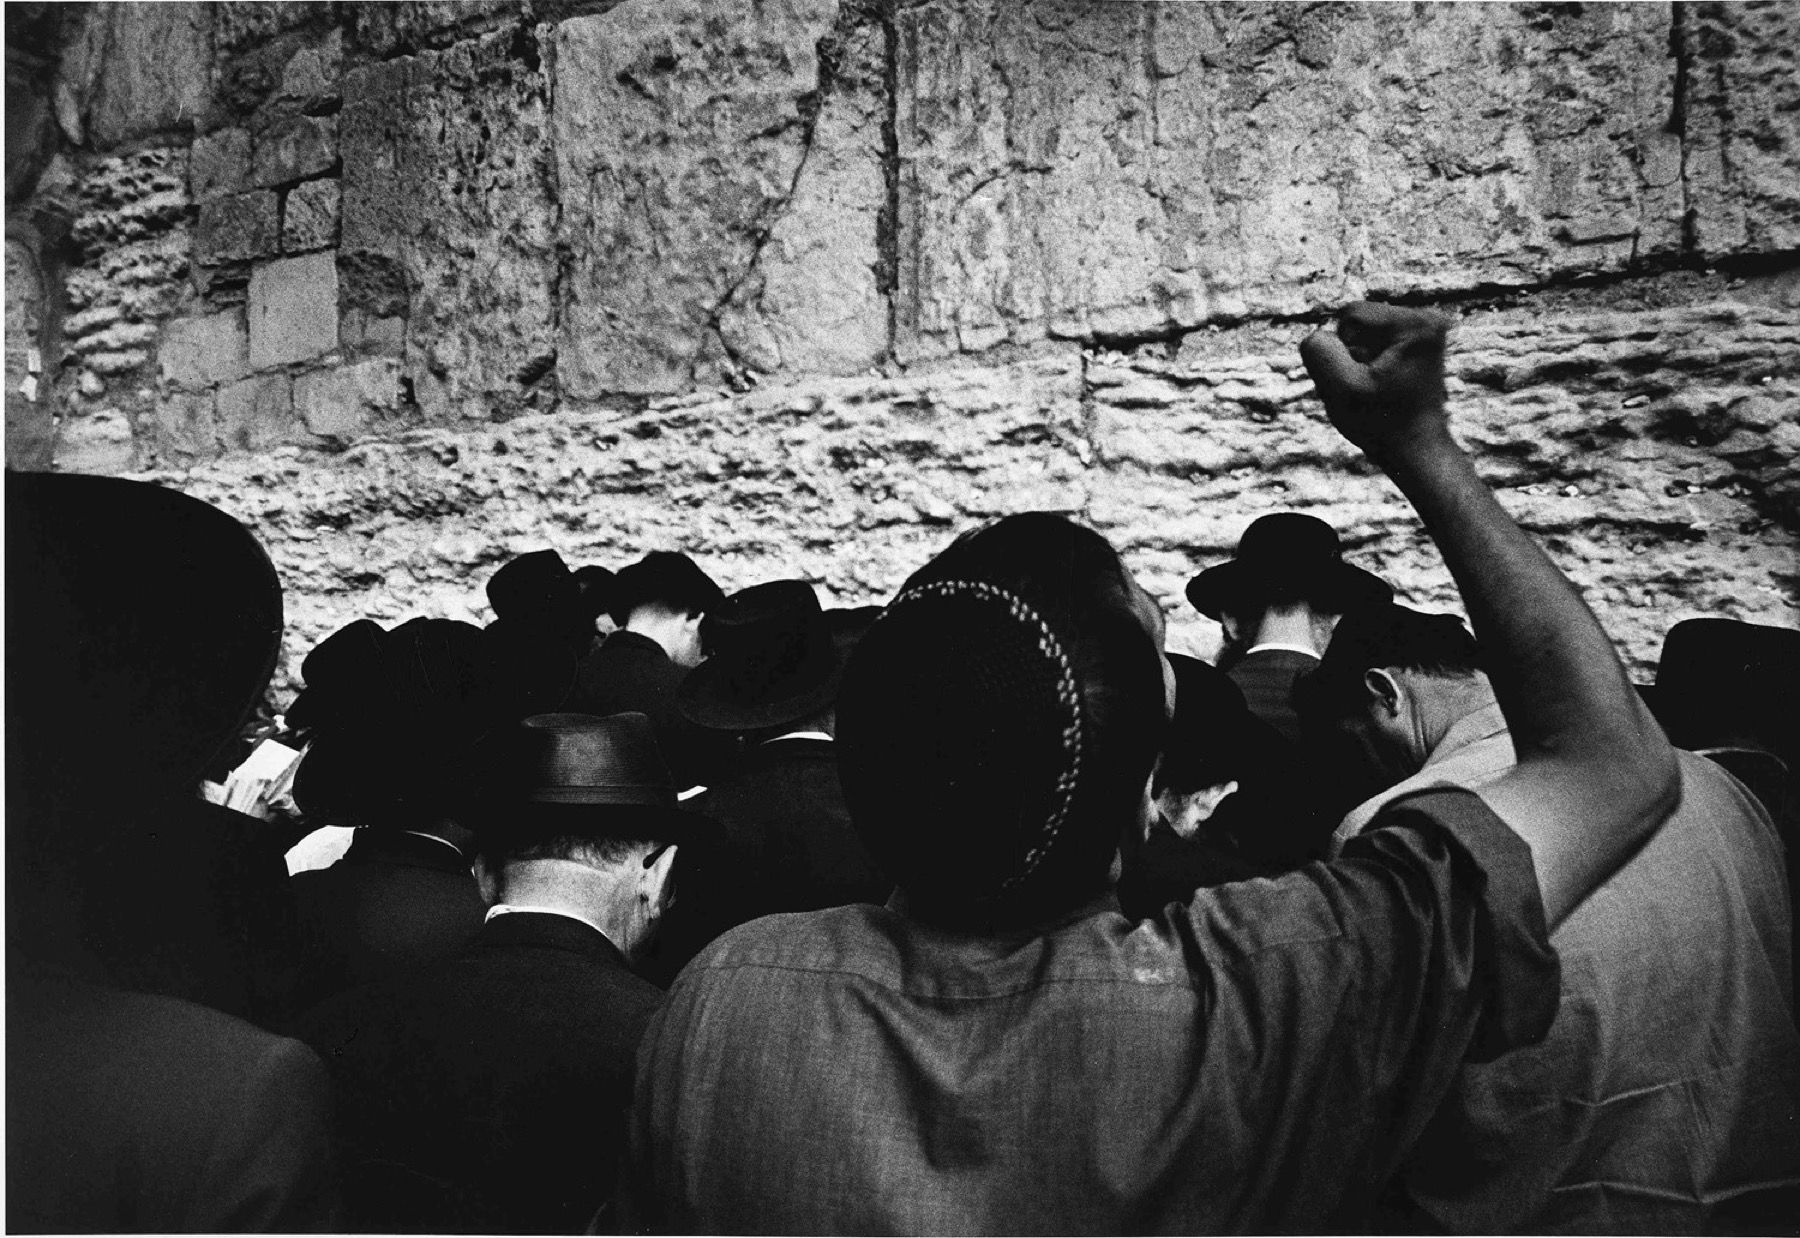 Leonard Freed 哭墙，耶路撒冷，1967年

明胶银版画，后期印刷
8 x 10 in.(6.5 x 9.6 in. Picture)
题目和日期为&hellip;